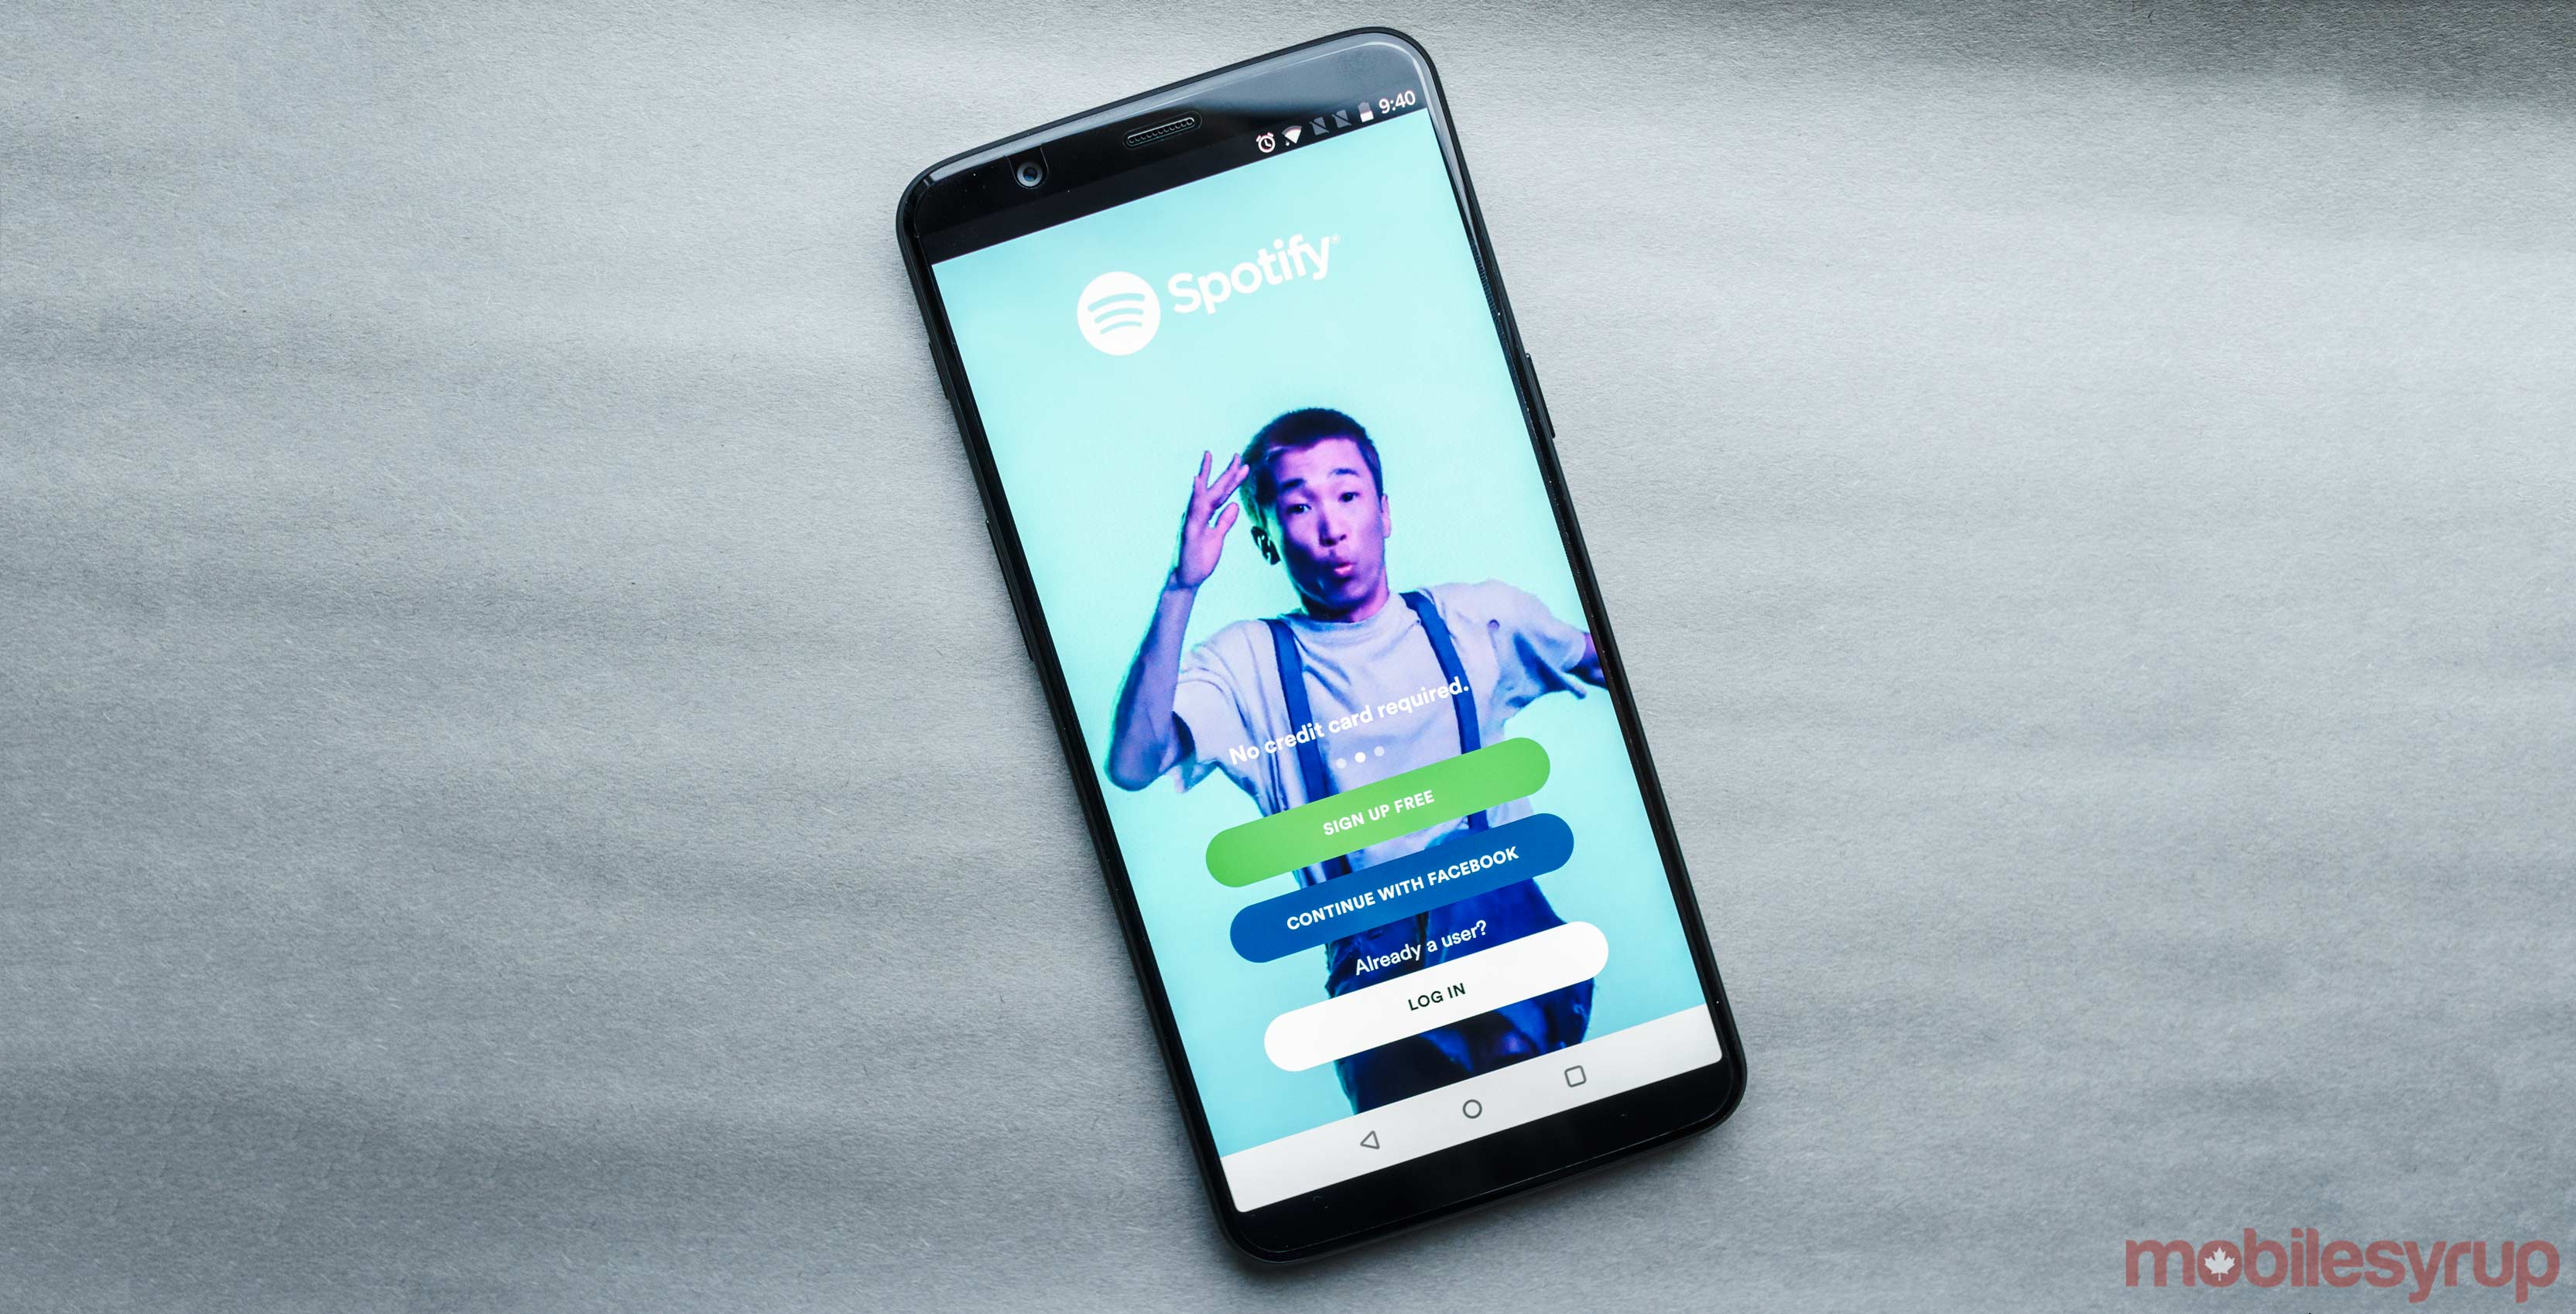 Spotify app on phone